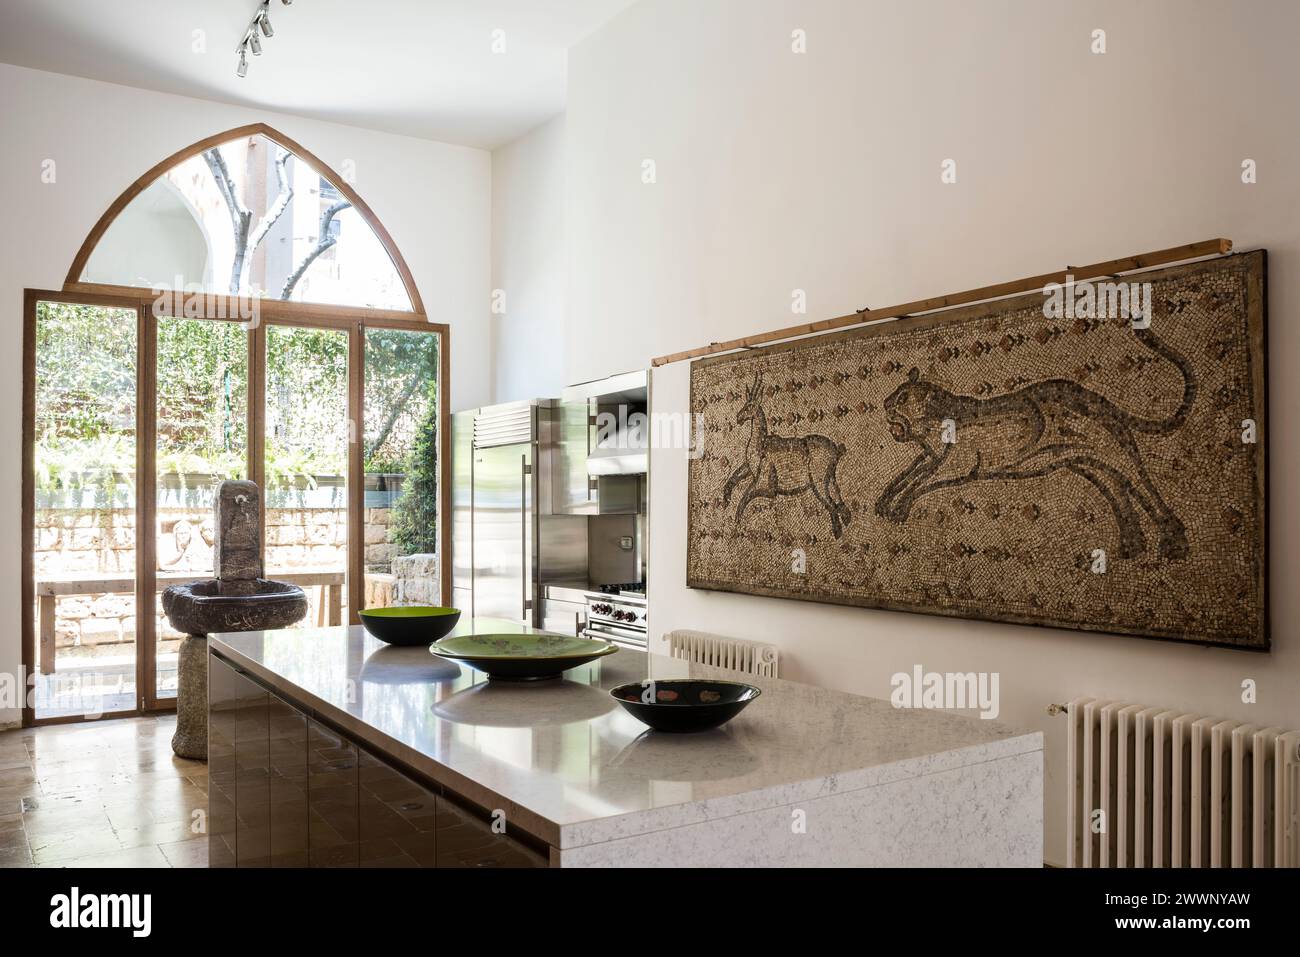 Opere d'arte panoramiche in cucina moderna. Appartamento di lusso a Beirut, Libano. Foto Stock